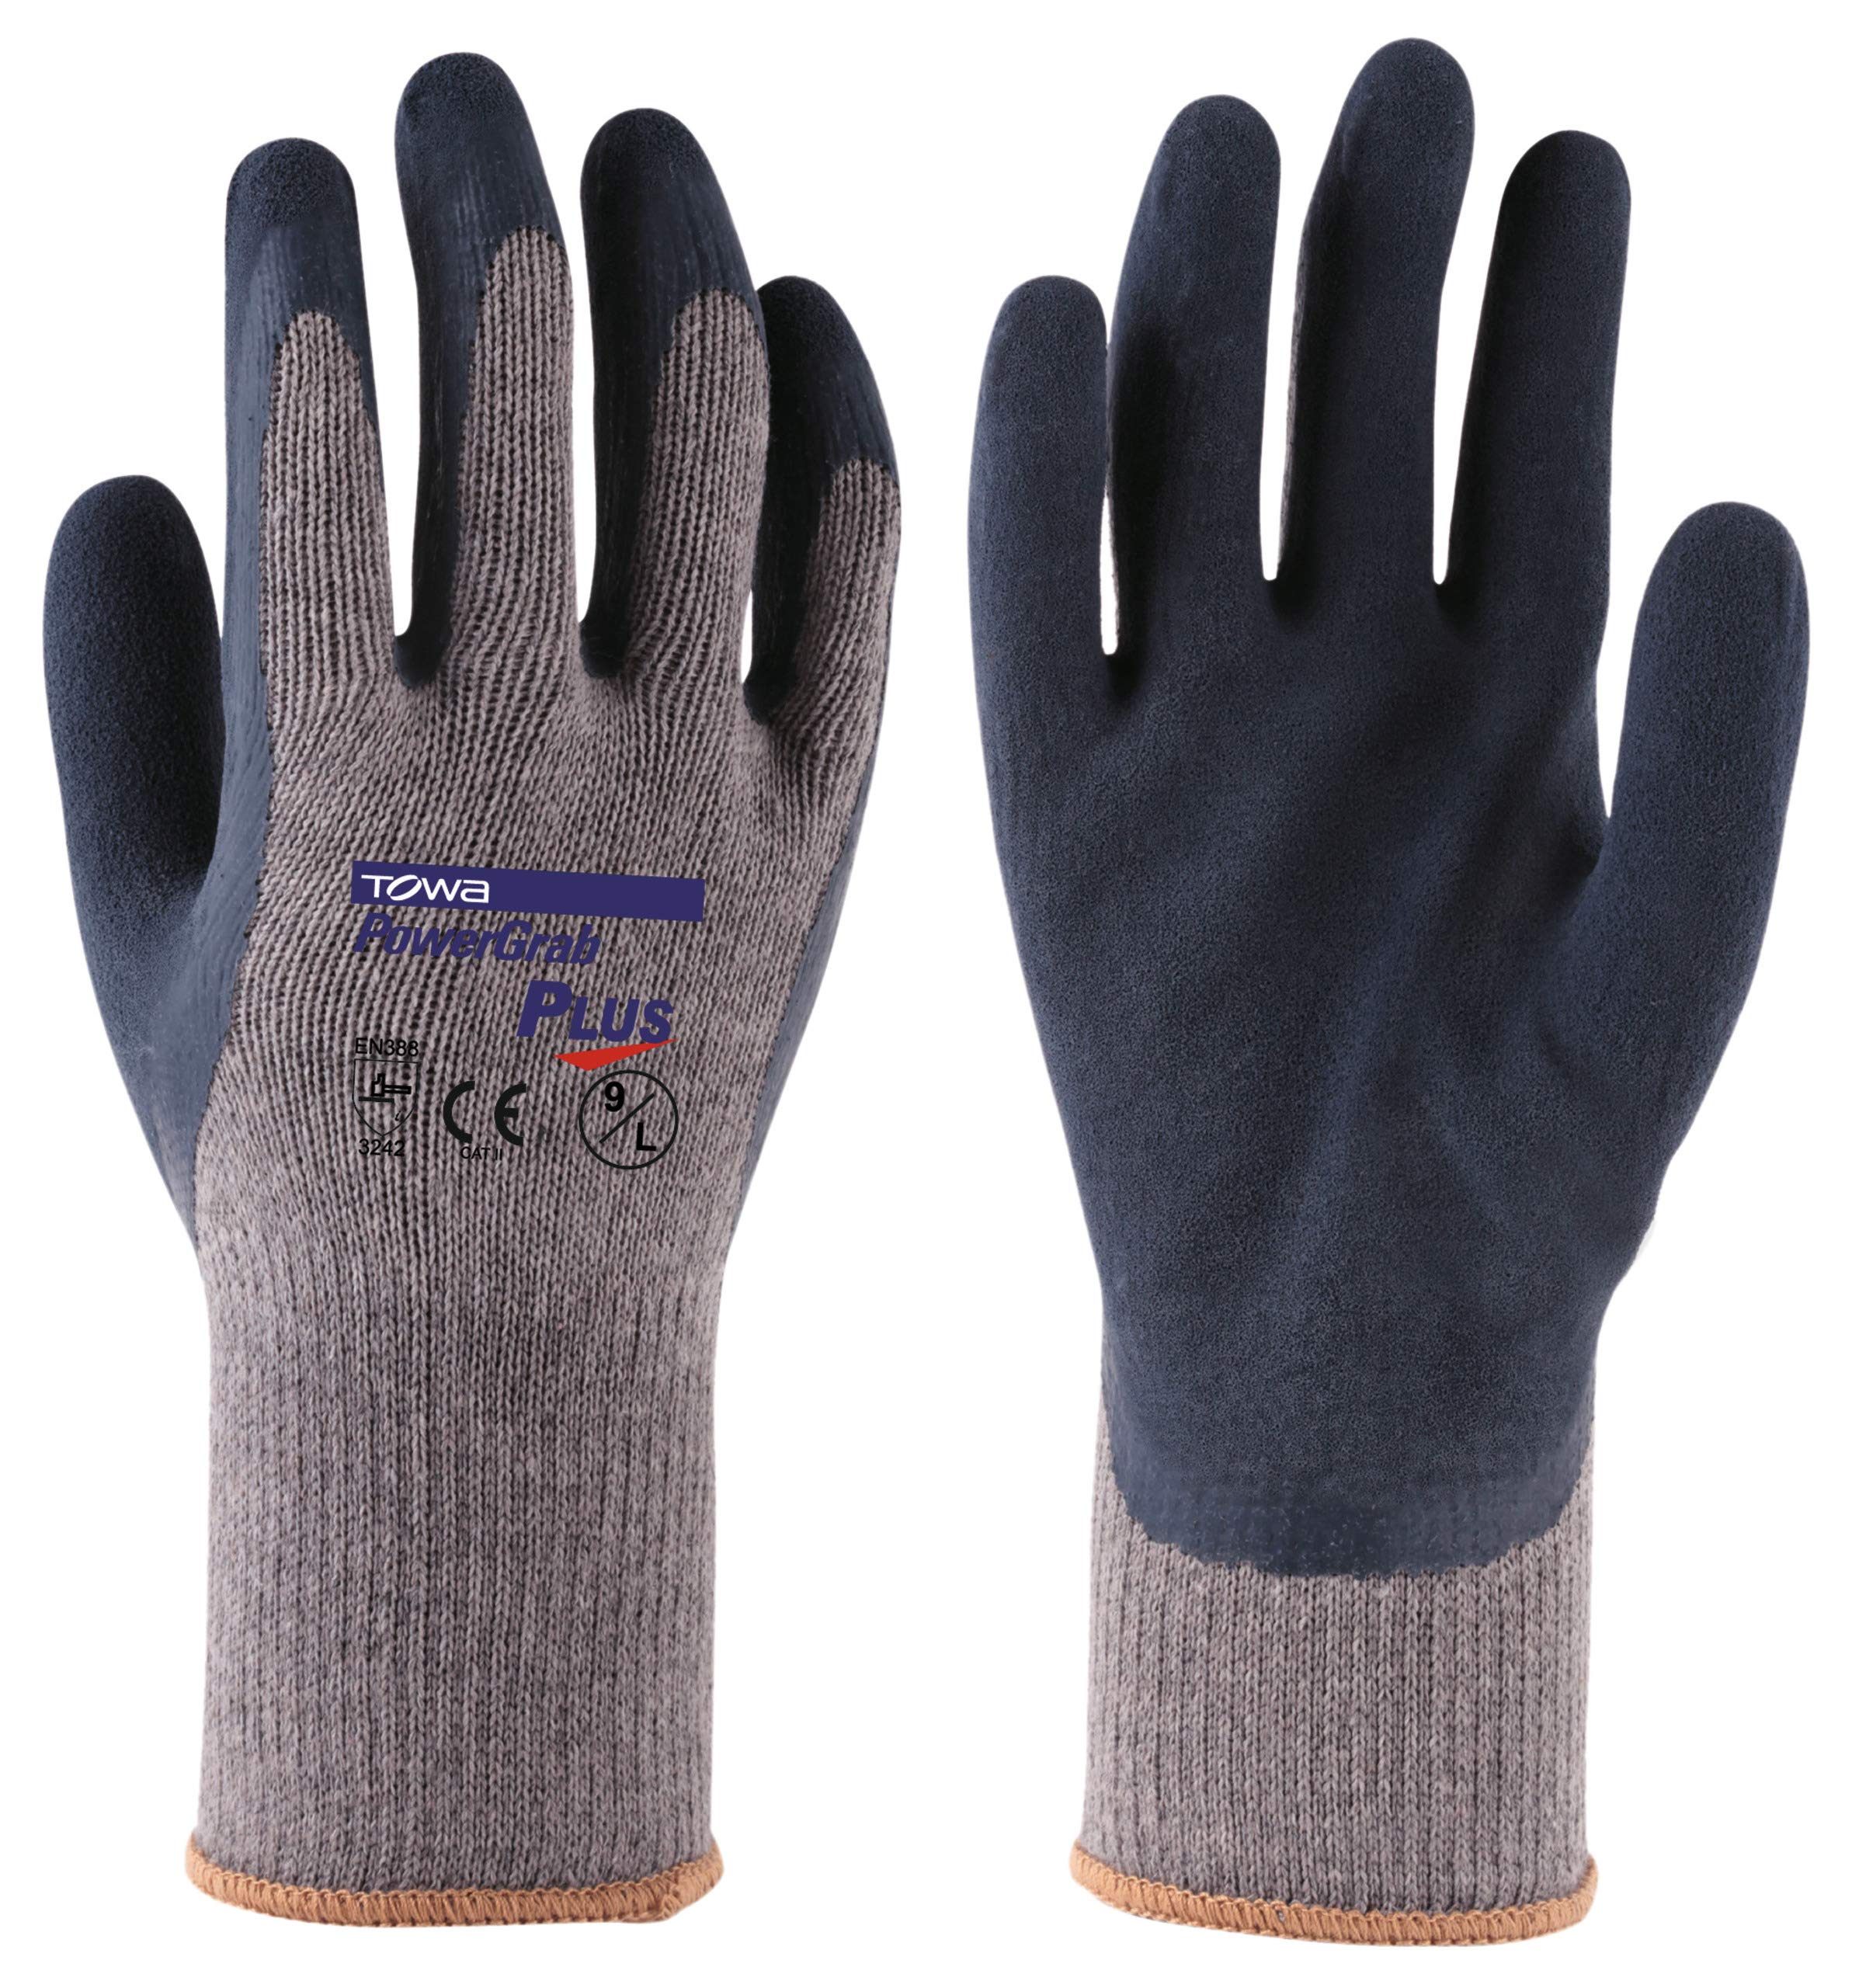 TOWA Power Grab Plus Arbeitshandschuhe Handschuhe Montagehandschuhe 12 Paar im Pack (11)